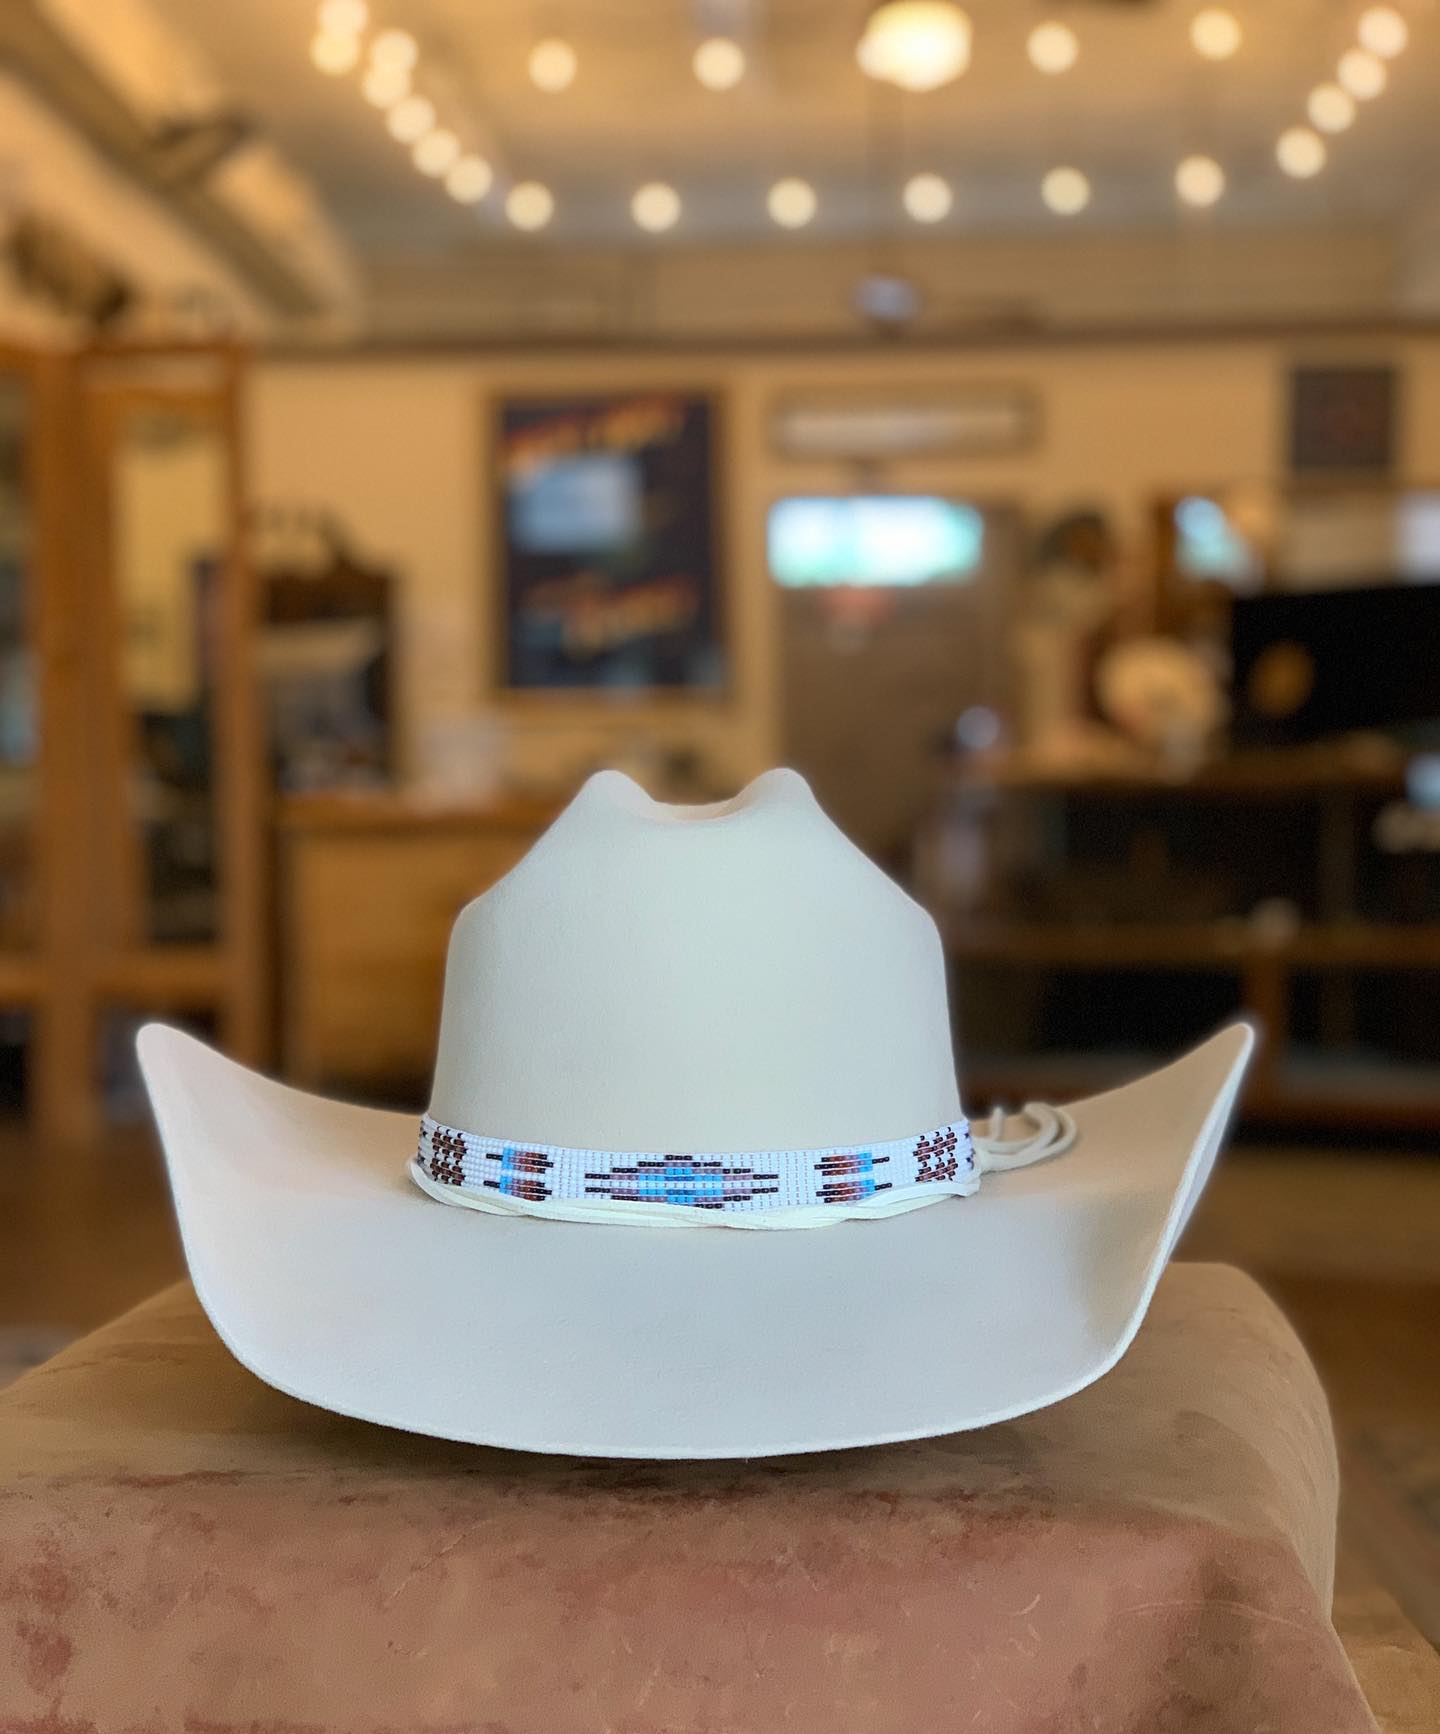 Nathaniel's Custom Hats - Georgetown - Shop Across Texas